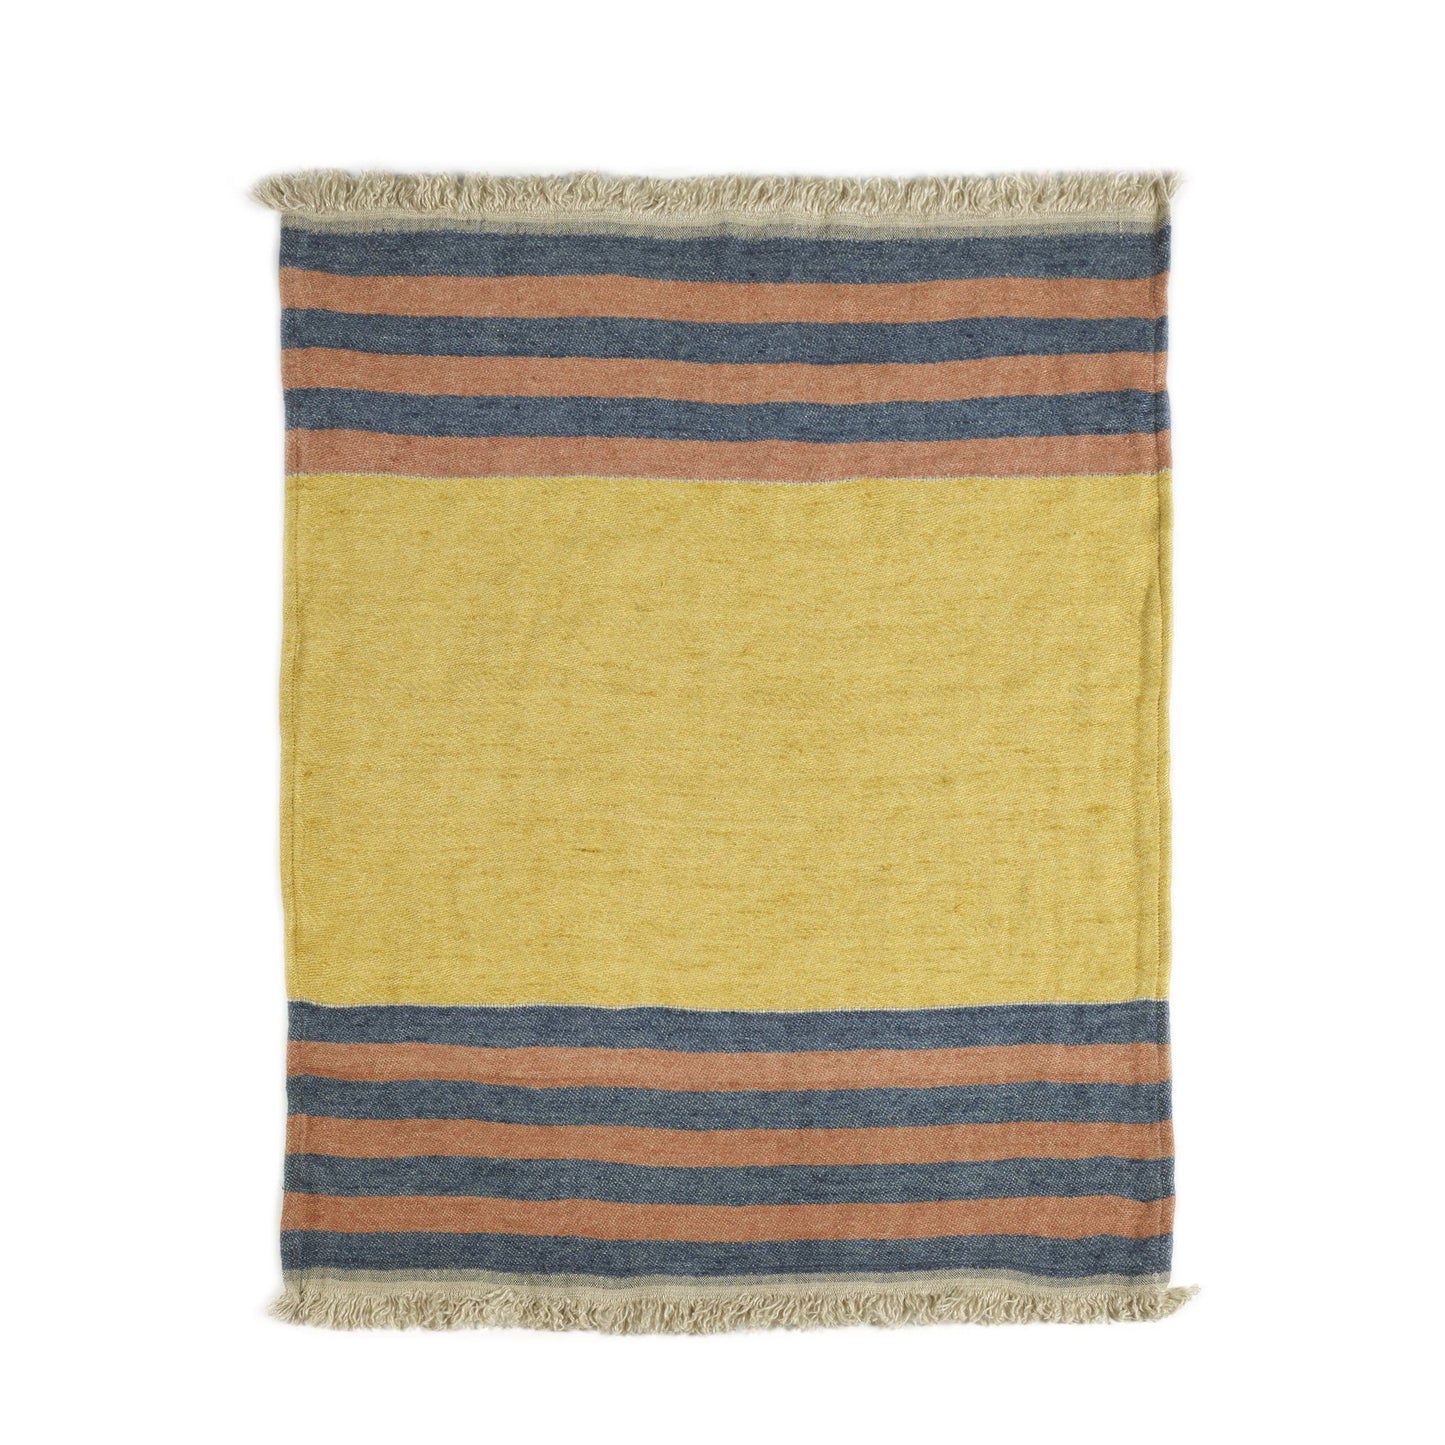 Libeco Belgian Towel Fouta Red Earth Stripe | Libeco | Miss Arthur | Home Goods | Tasmania